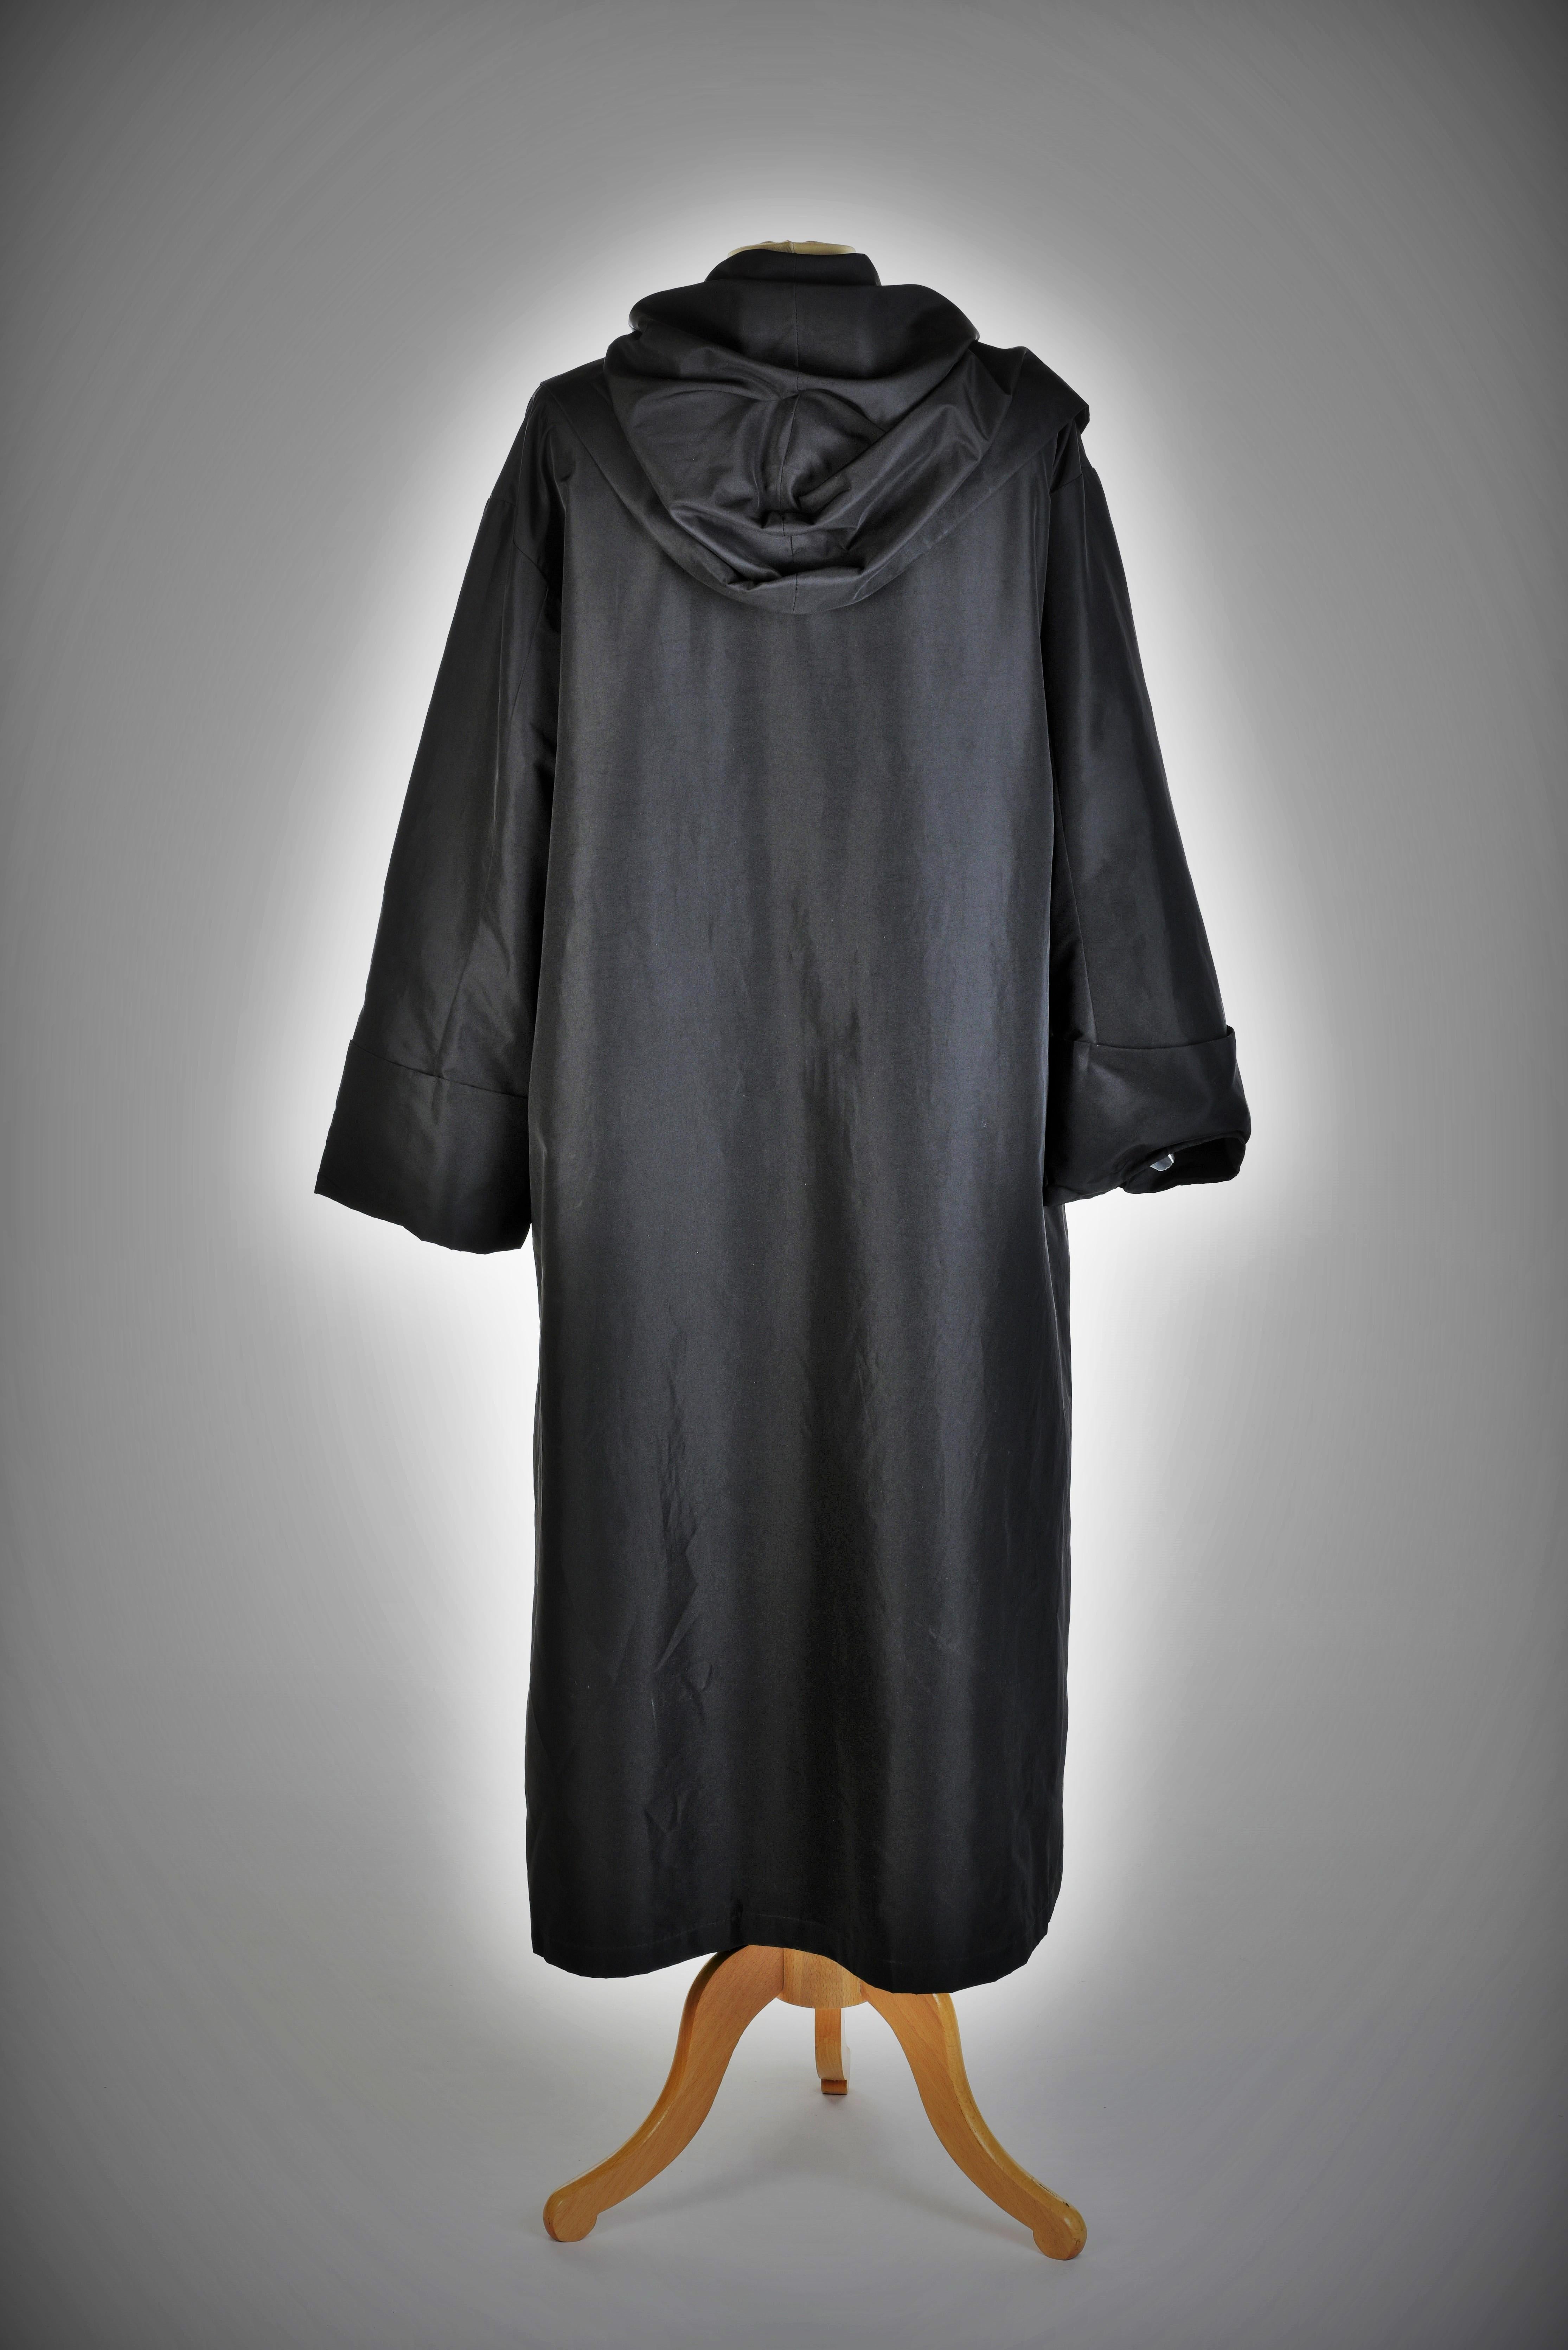 Women's Black taffeta evening coat with Christian Dior label Circa 1955-1960 For Sale